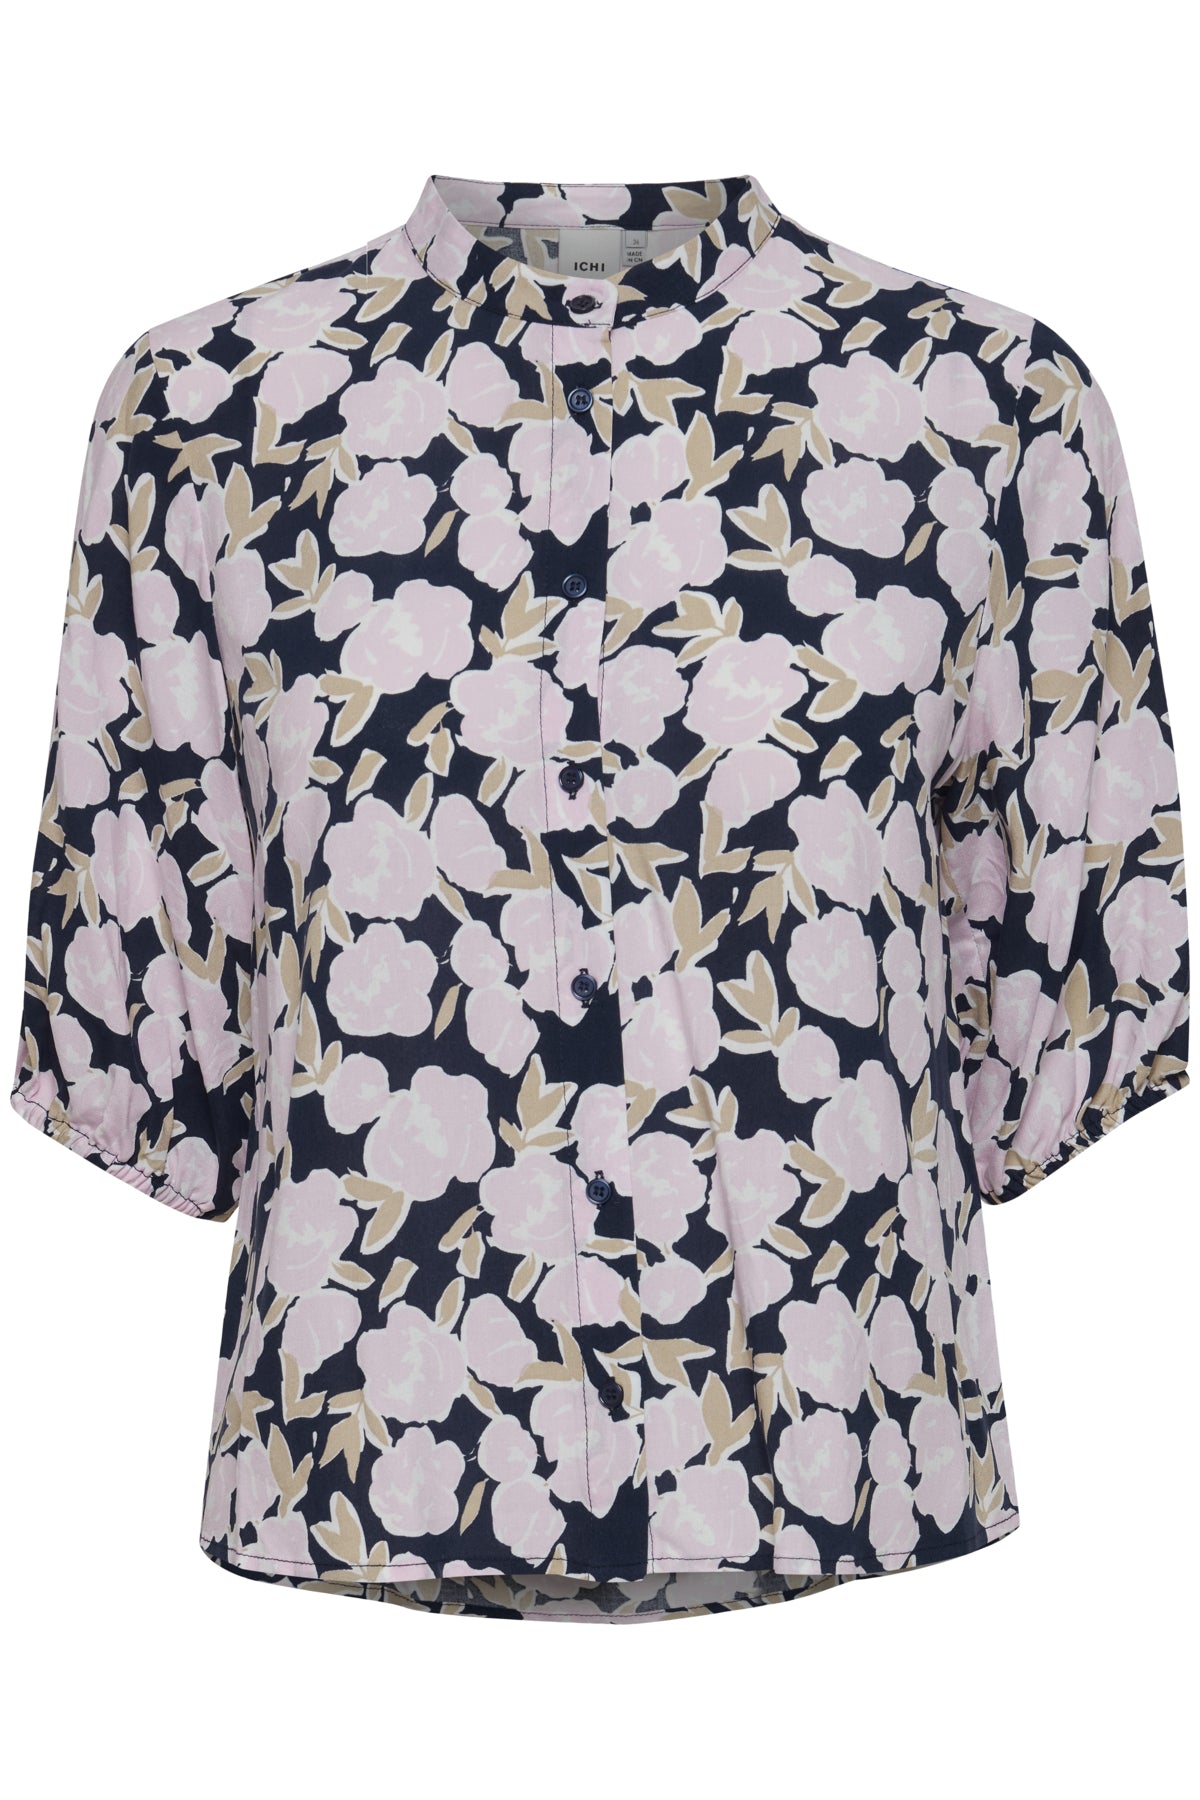 Cefalu Shirt (Lavender Fog)